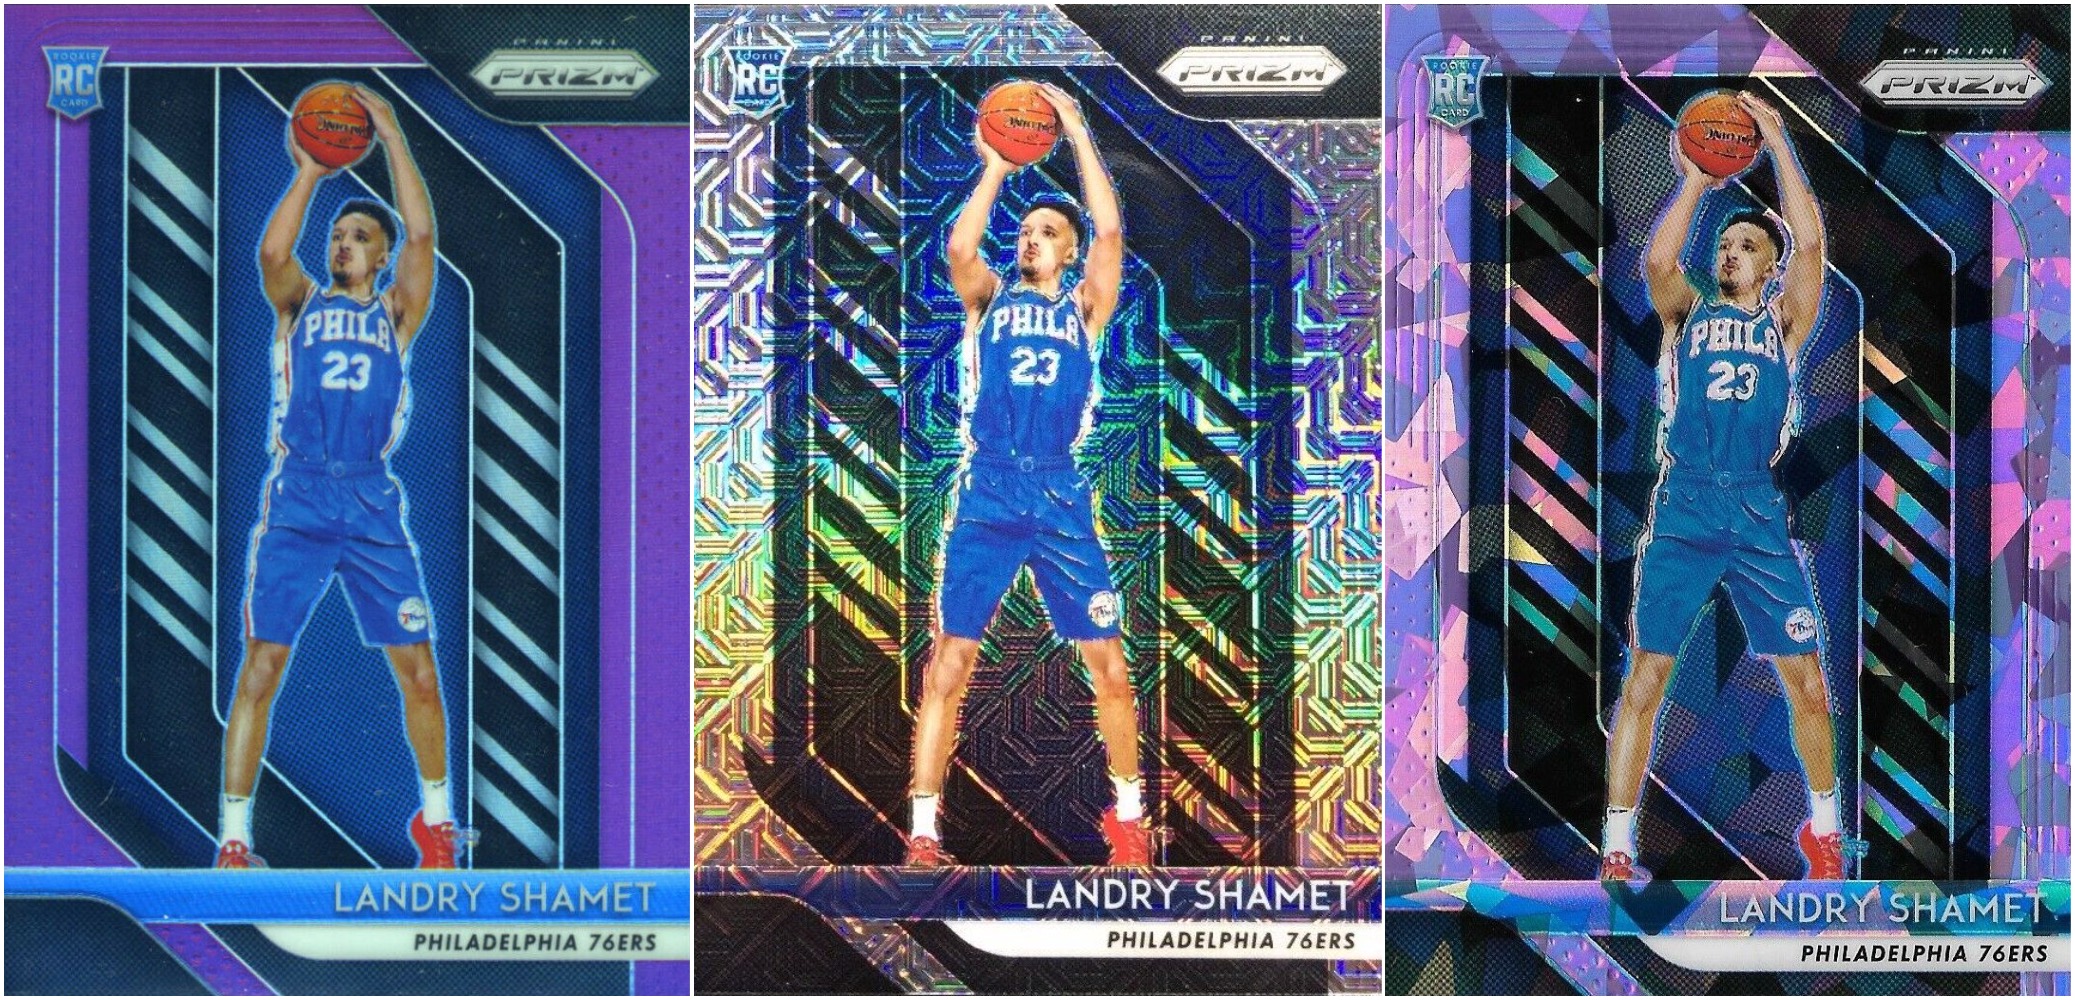 Three images of Landry Shamet sports trading cards